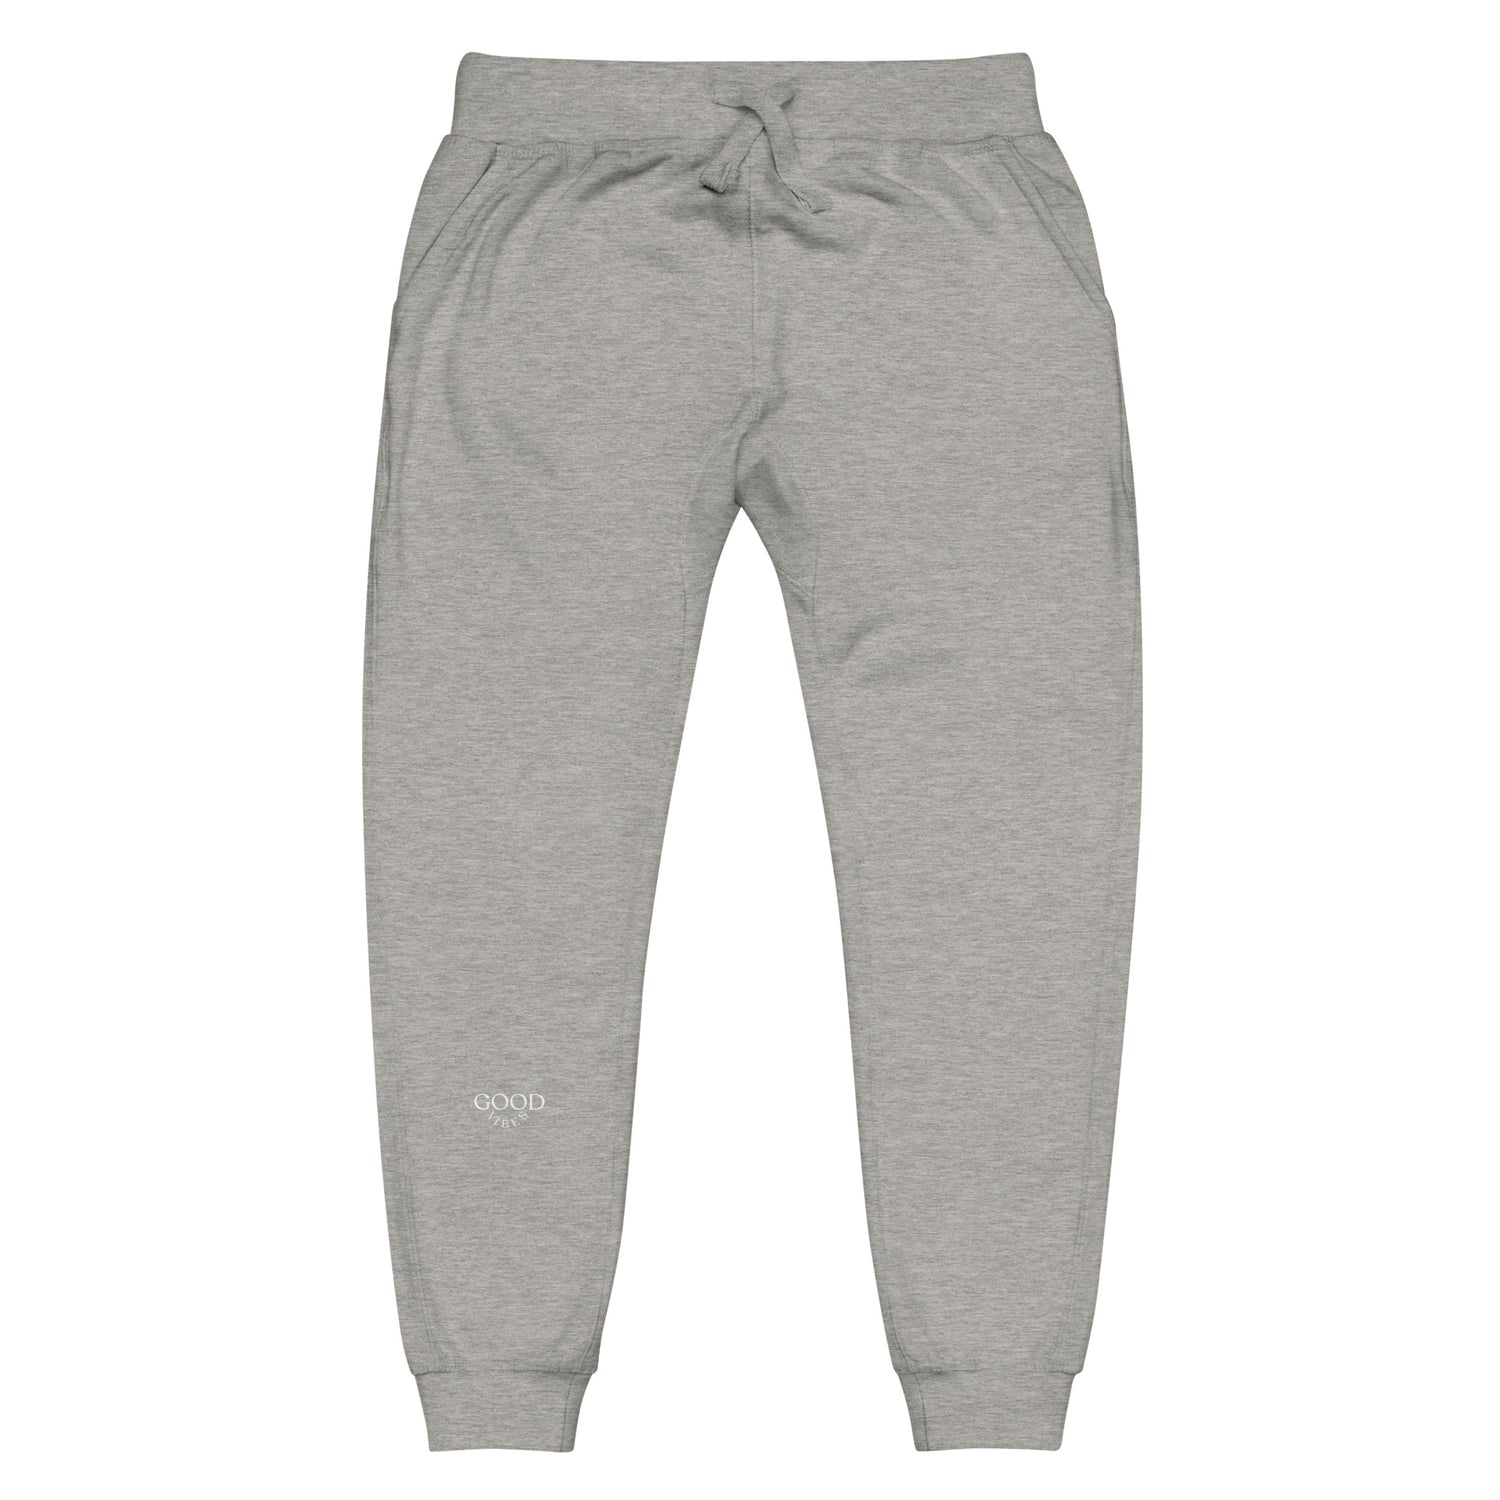 Grey Sweatpants spreading "Good vibes" energy.